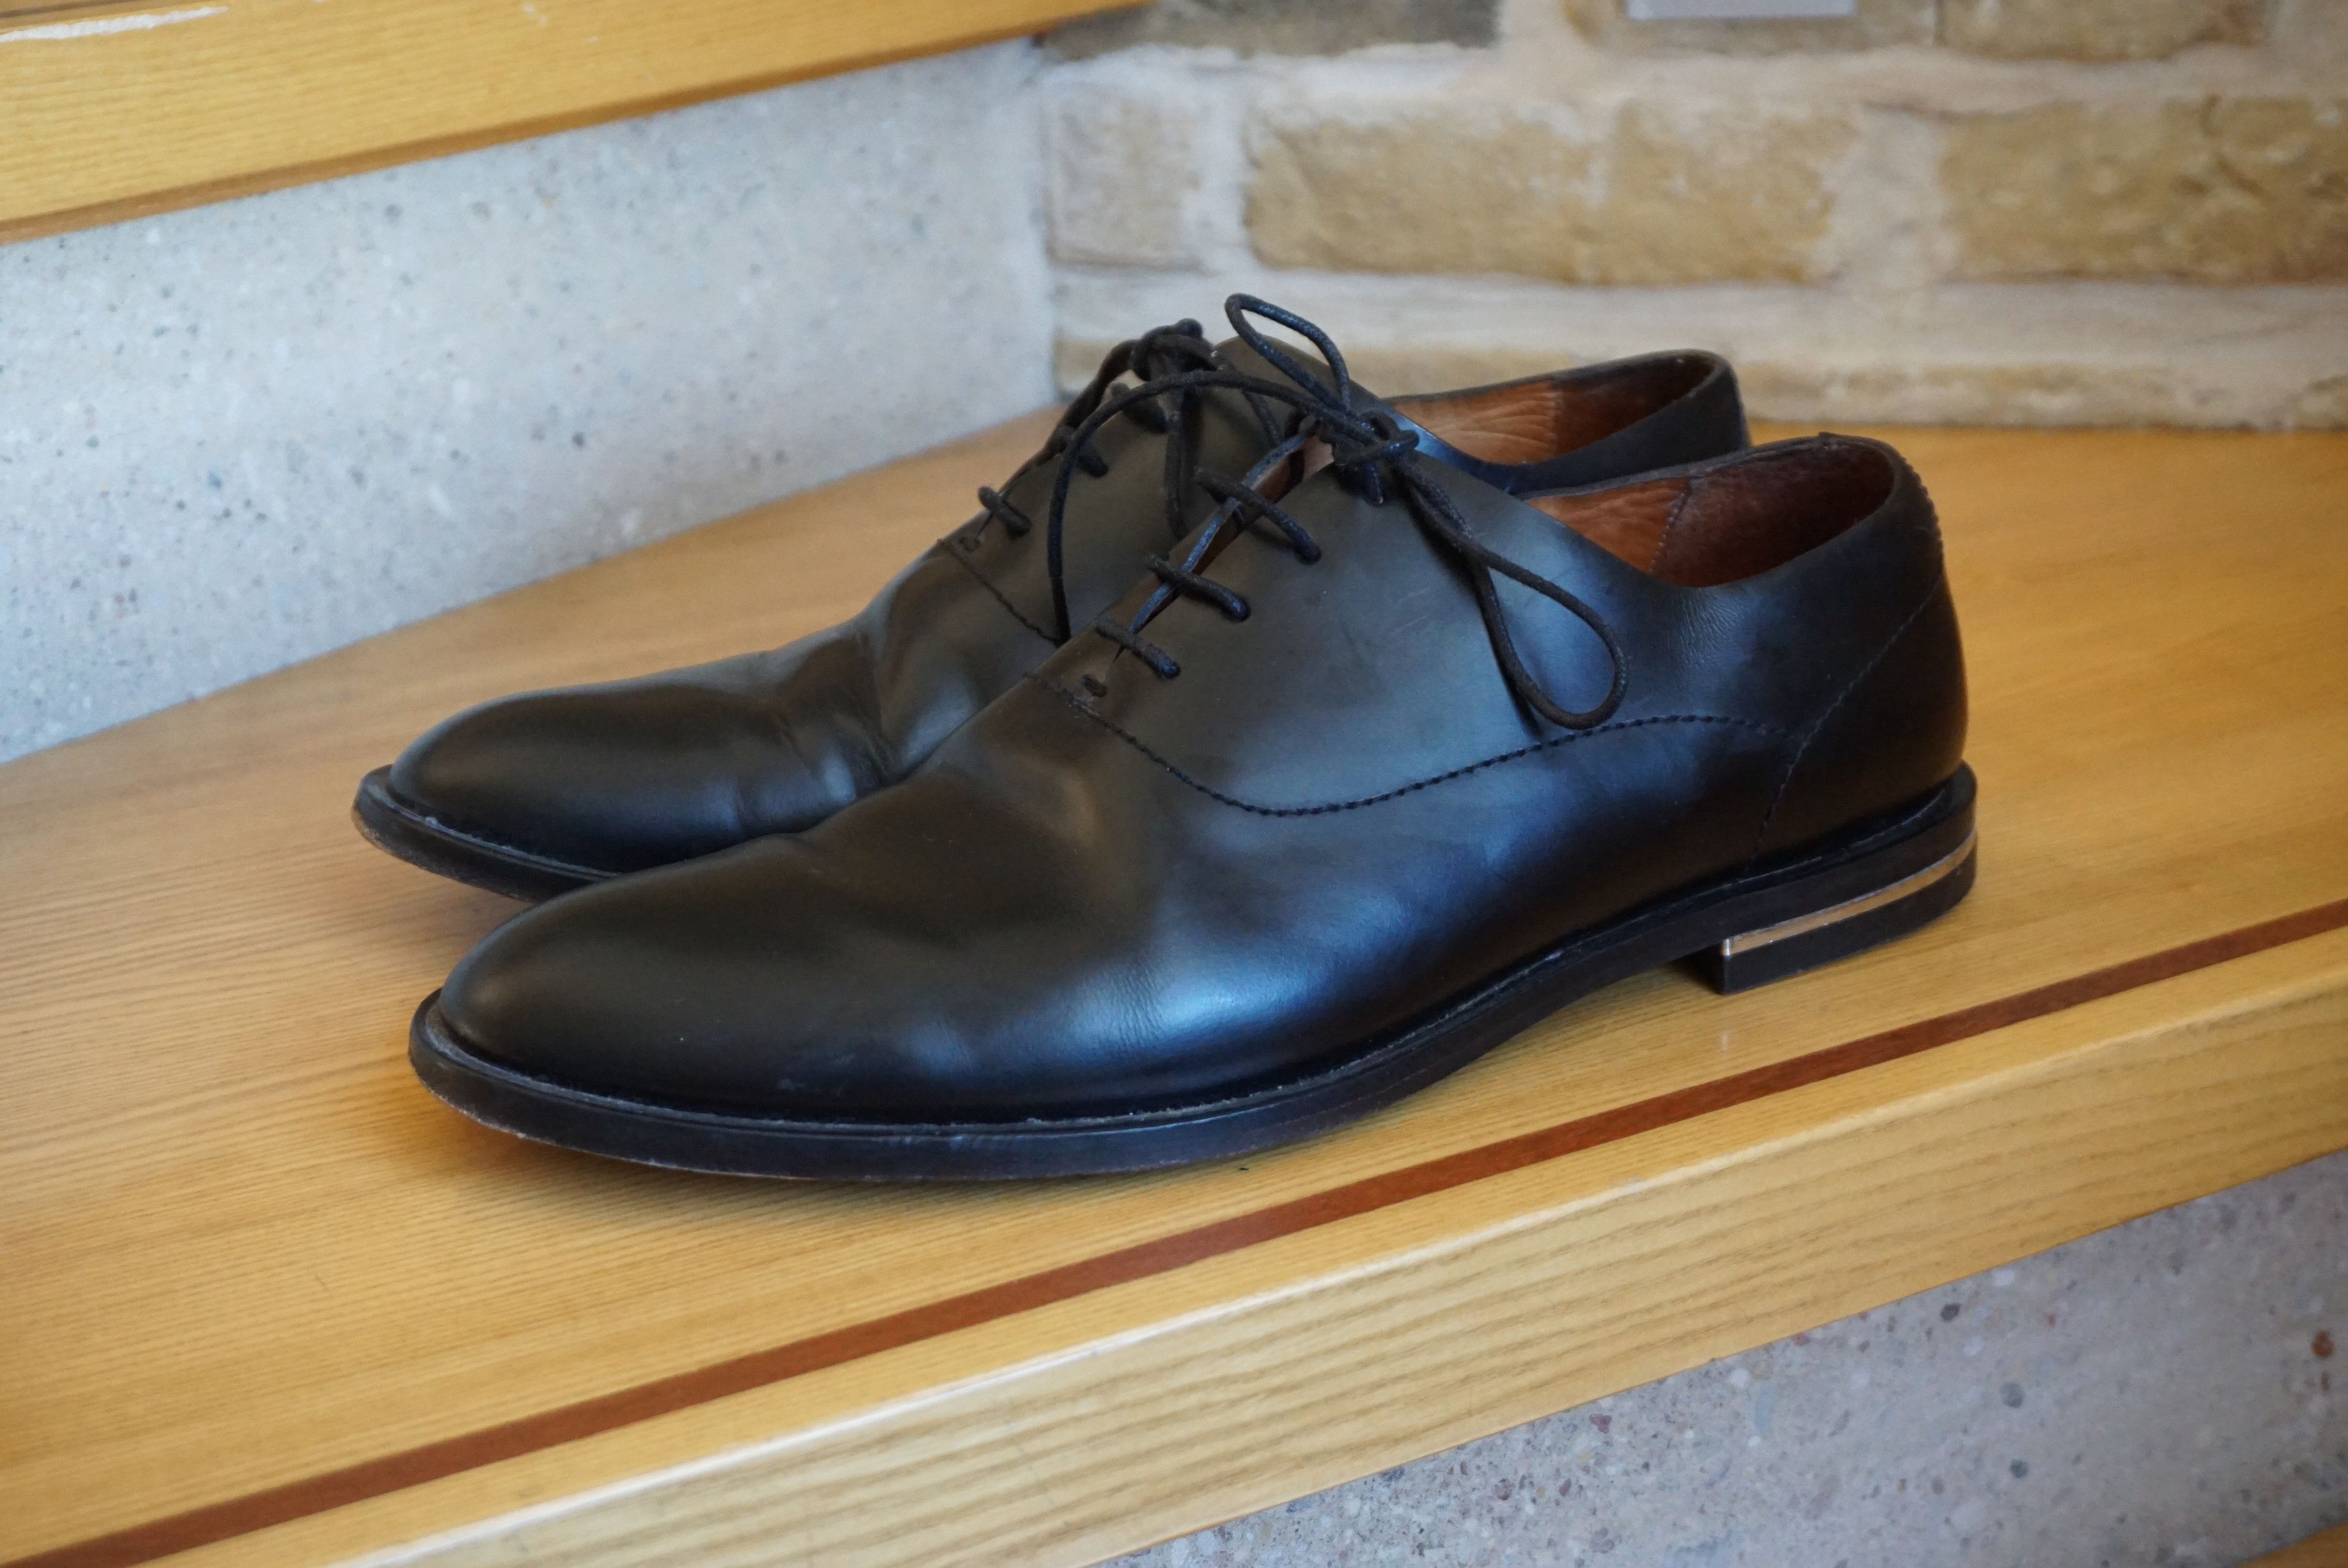 Cos COS RPR$250 leather office shoes EU44 black formal lace up Size US 10.5 / EU 43-44 - 12 Thumbnail